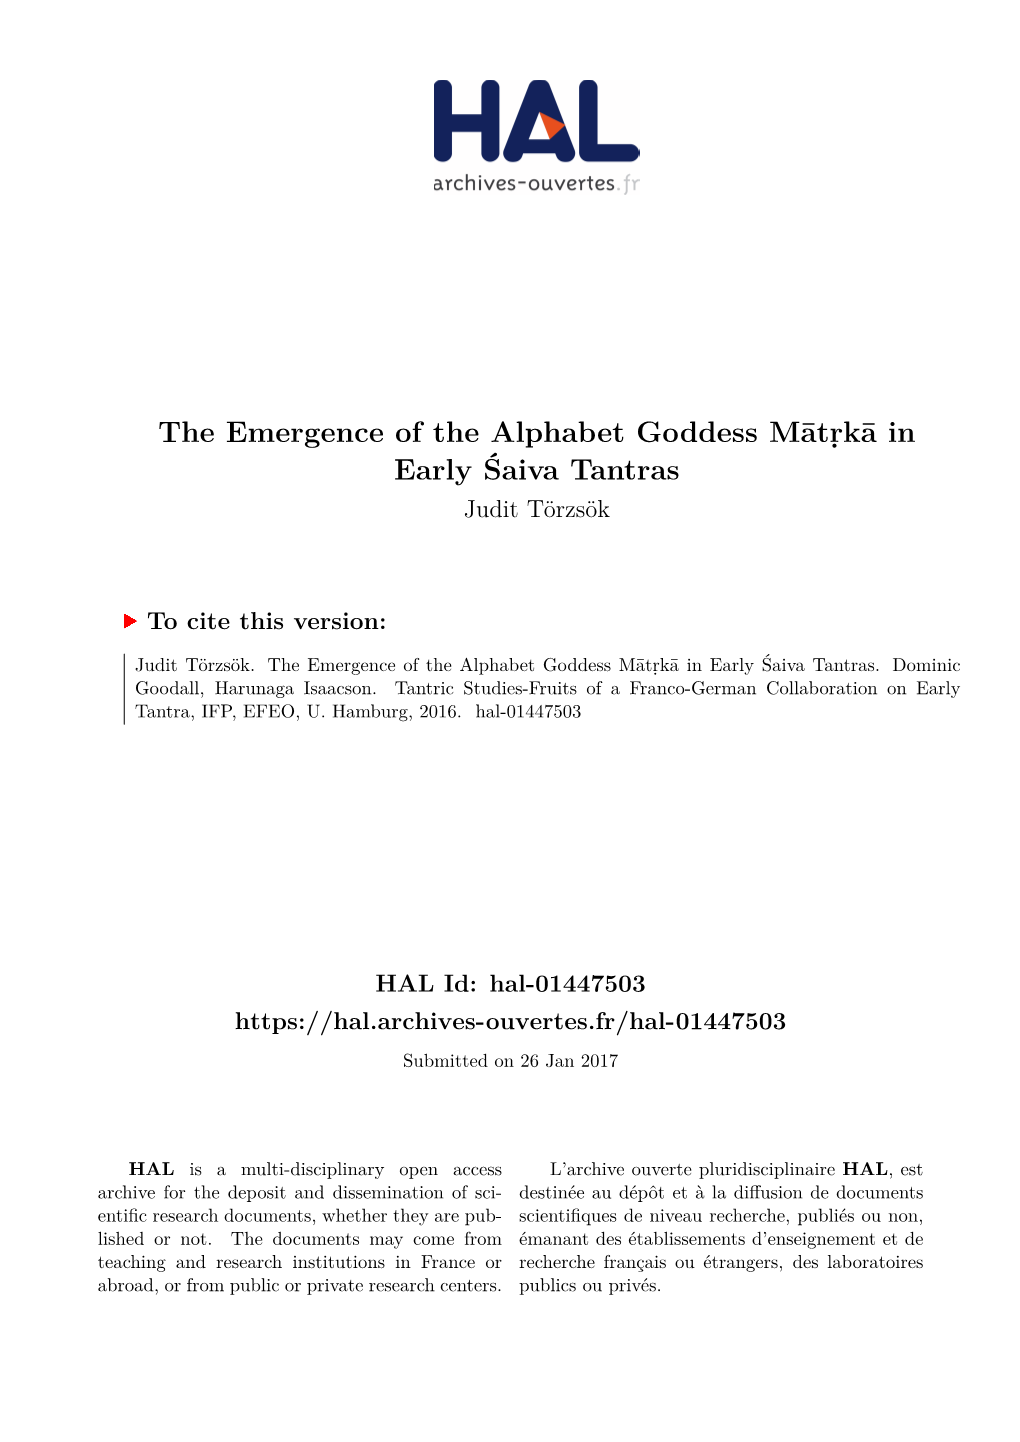 The Emergence of the Alphabet Goddess Mātṛkā in Early Śaiva Tantras Judit Törzsök